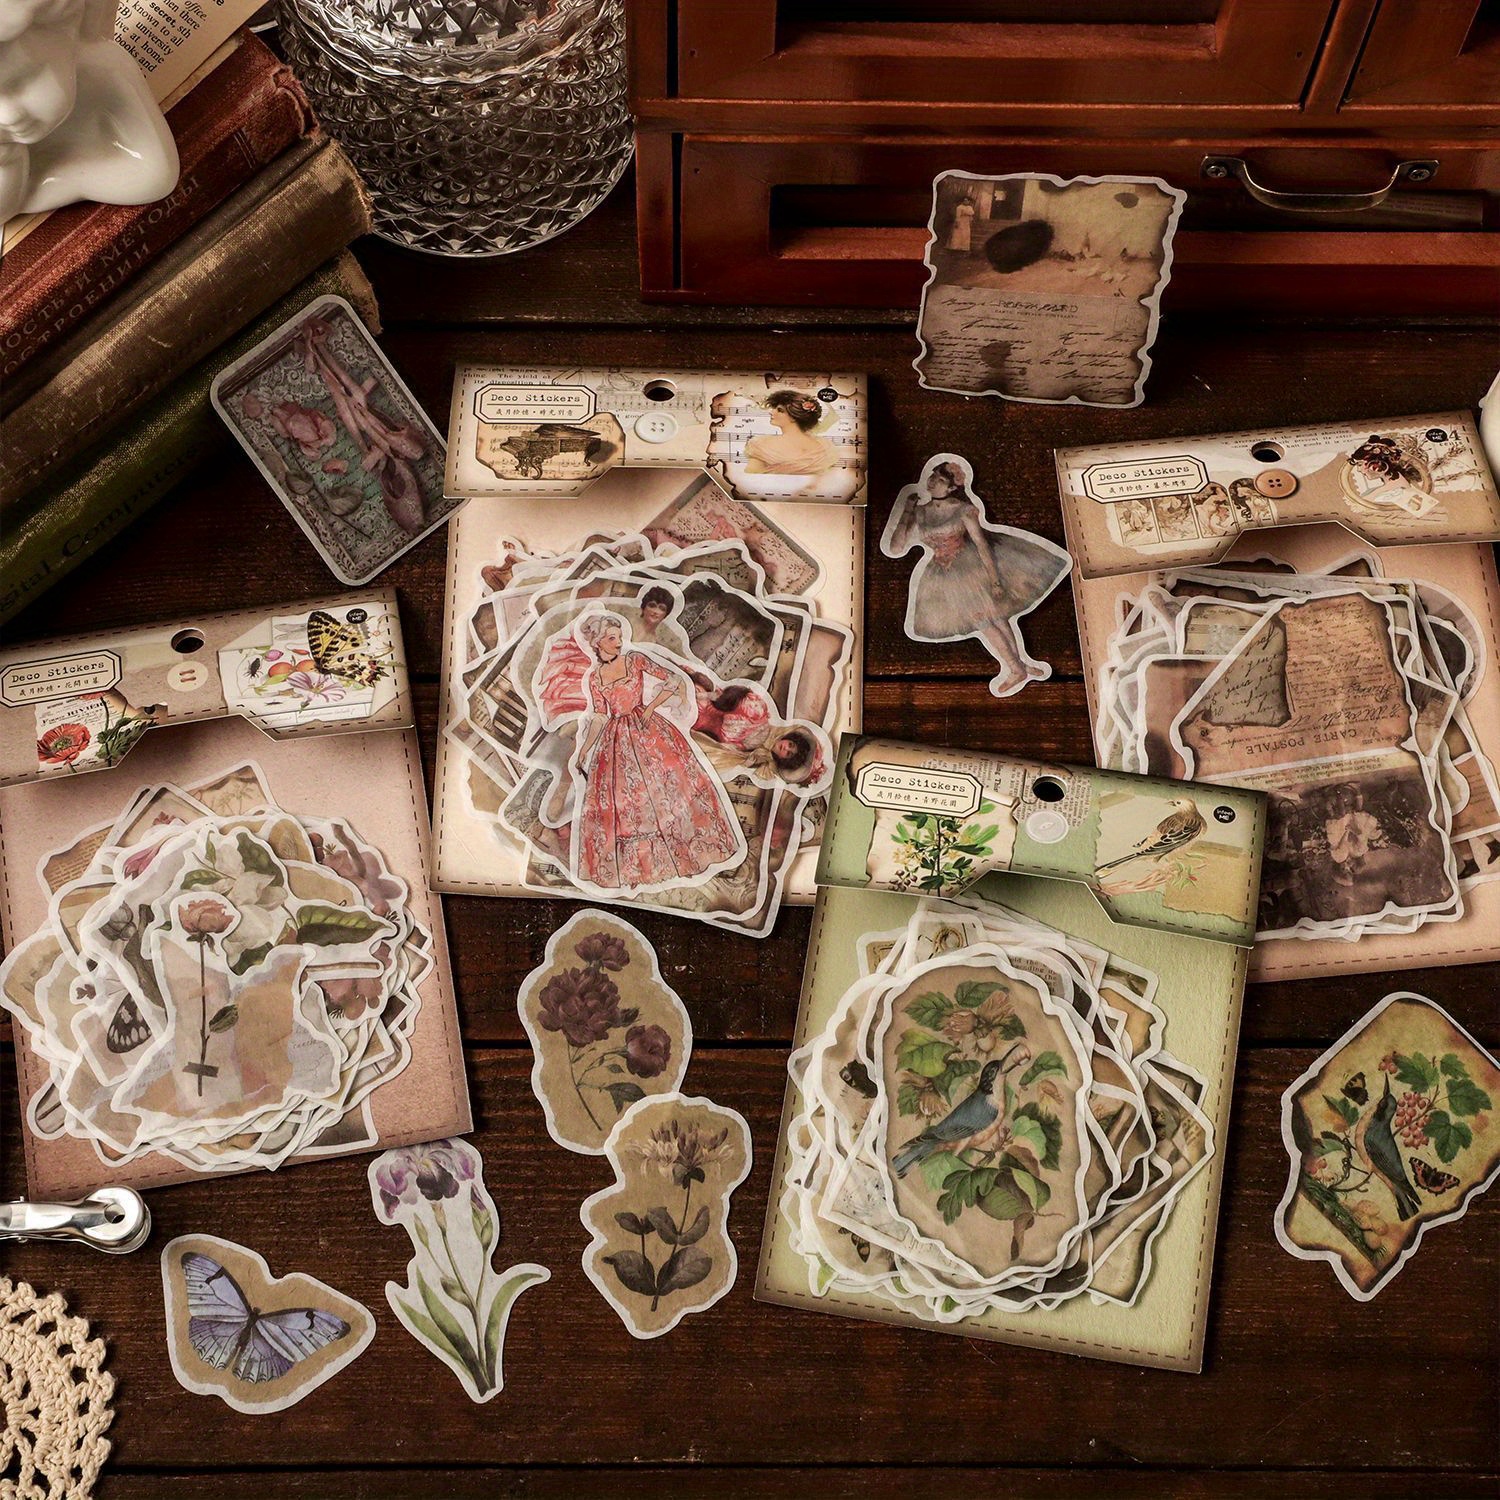 50Pcs Set Vintage DIY Scrapbooking Material Paper for Journaling Scrapbook  Embellishment Supplies Decorative Stationery Sticker